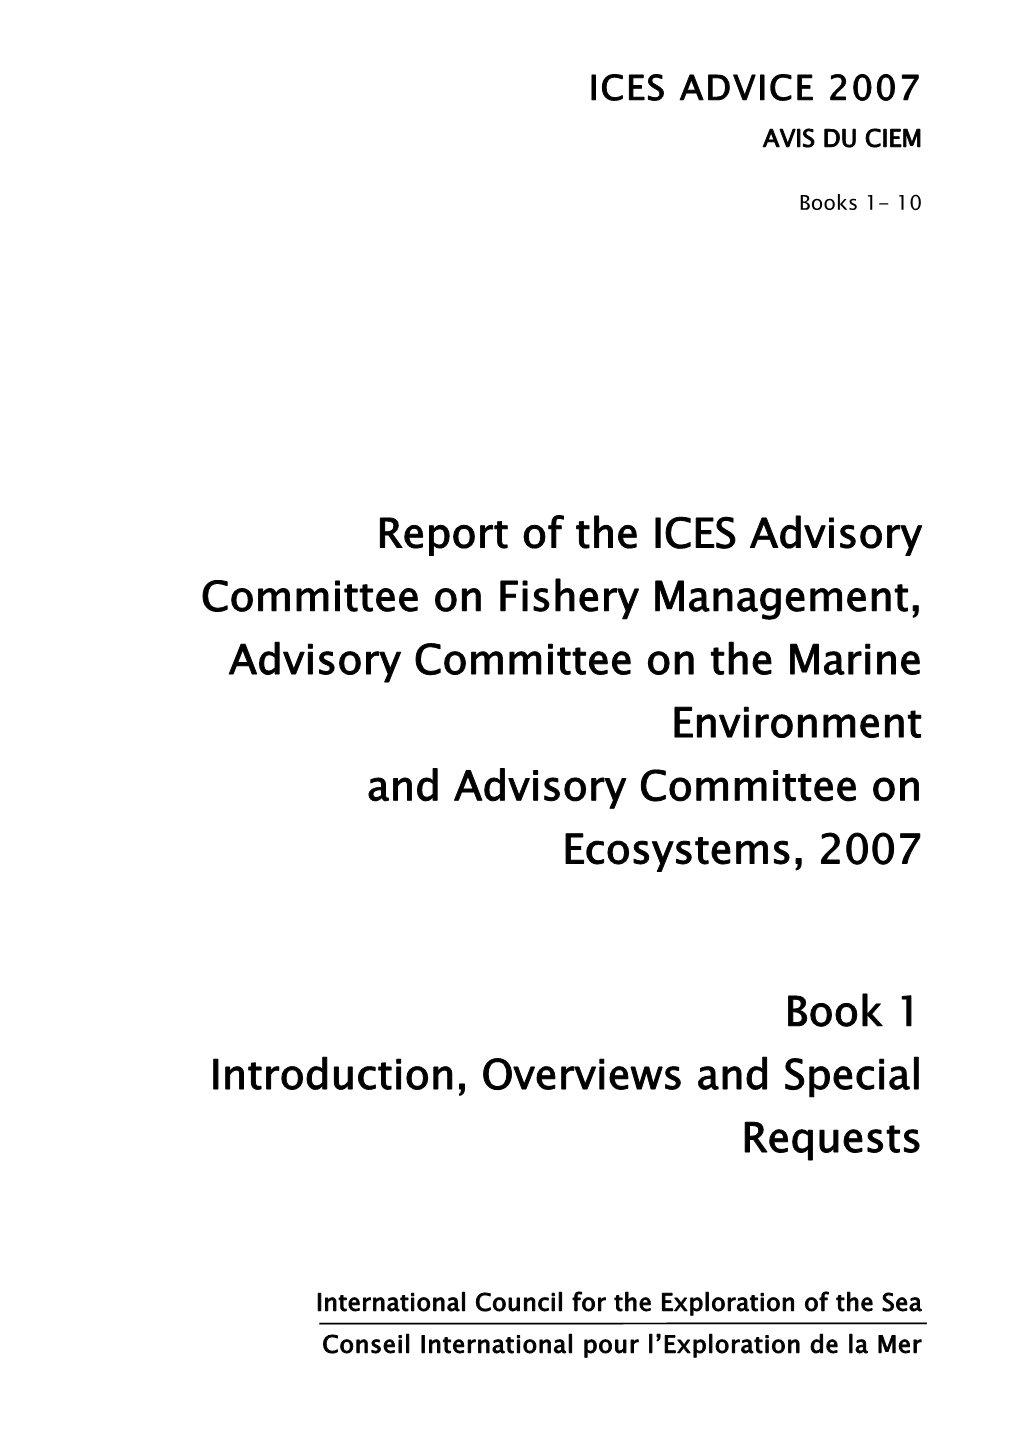 ICES ADVICE 2007 Book 1